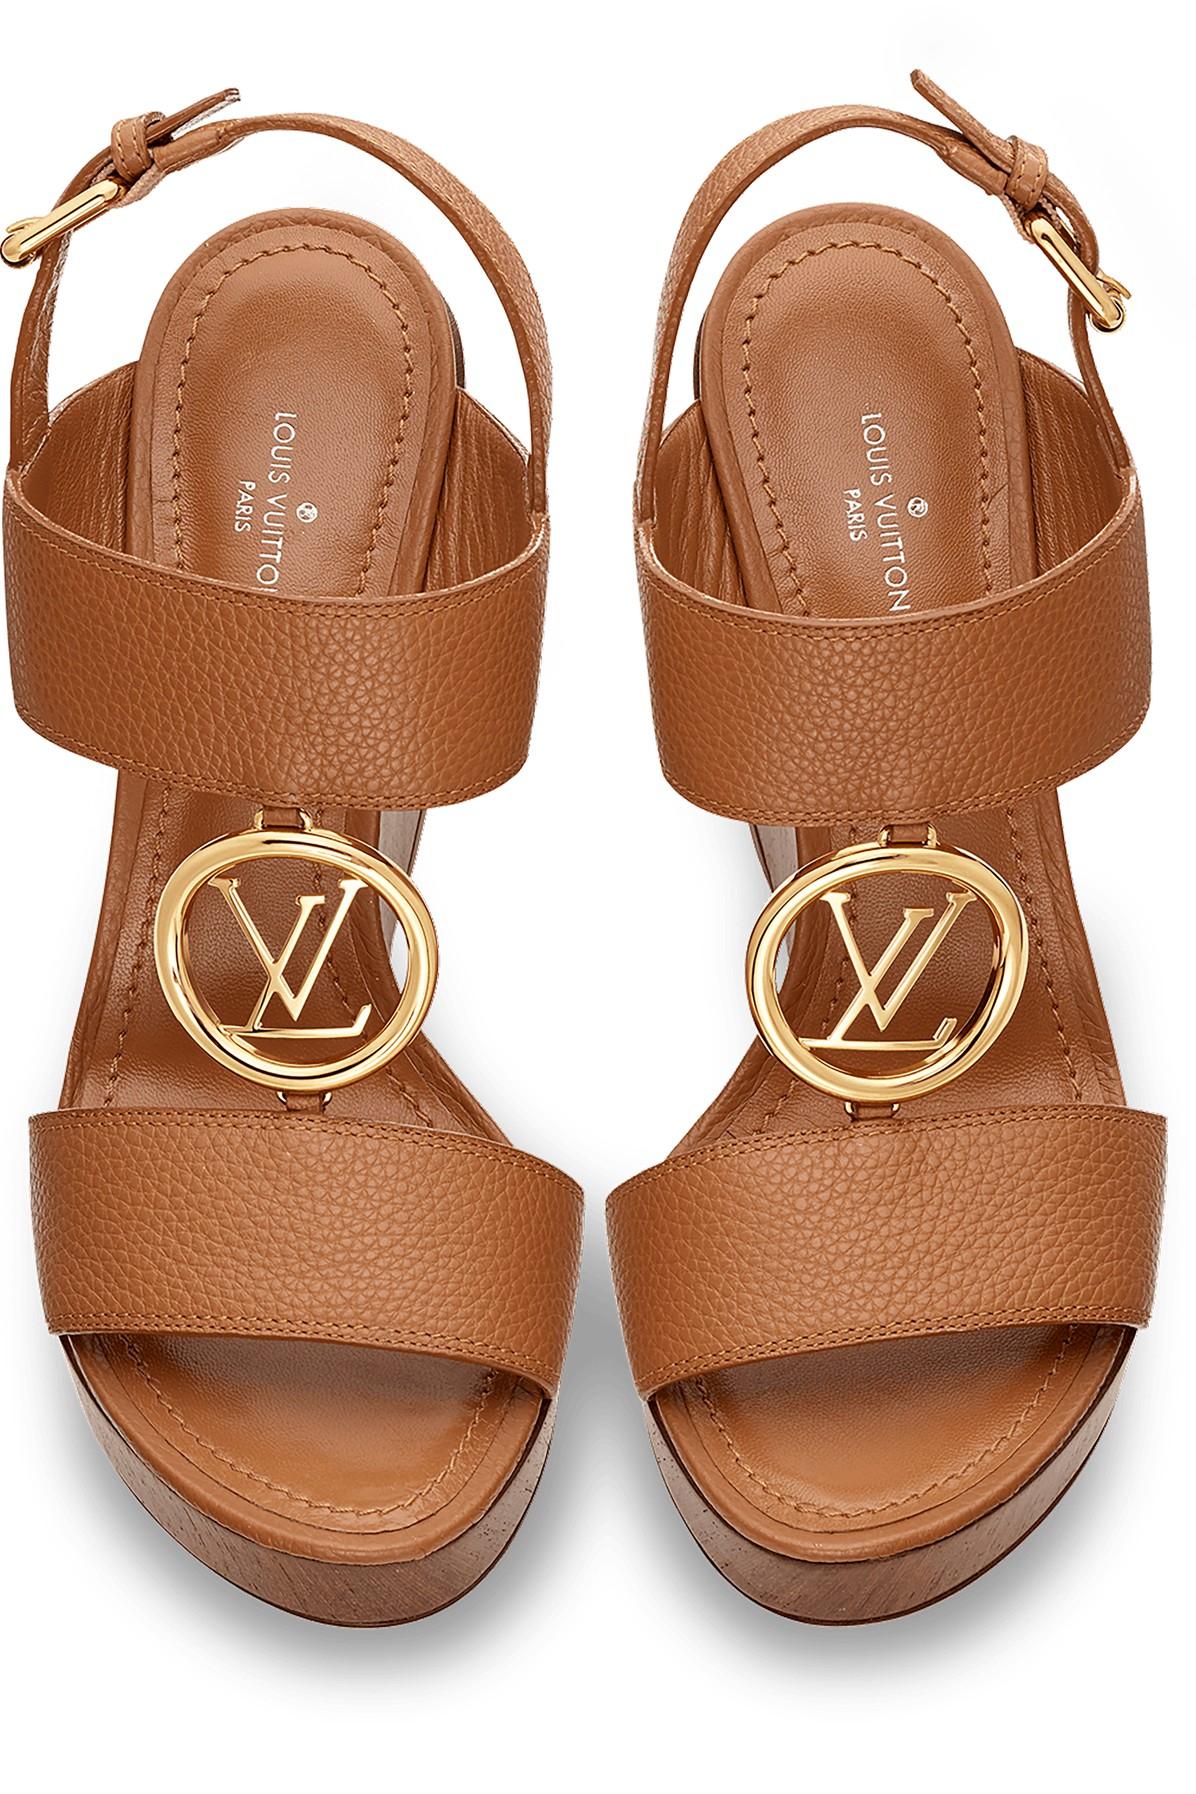 lv women sandals